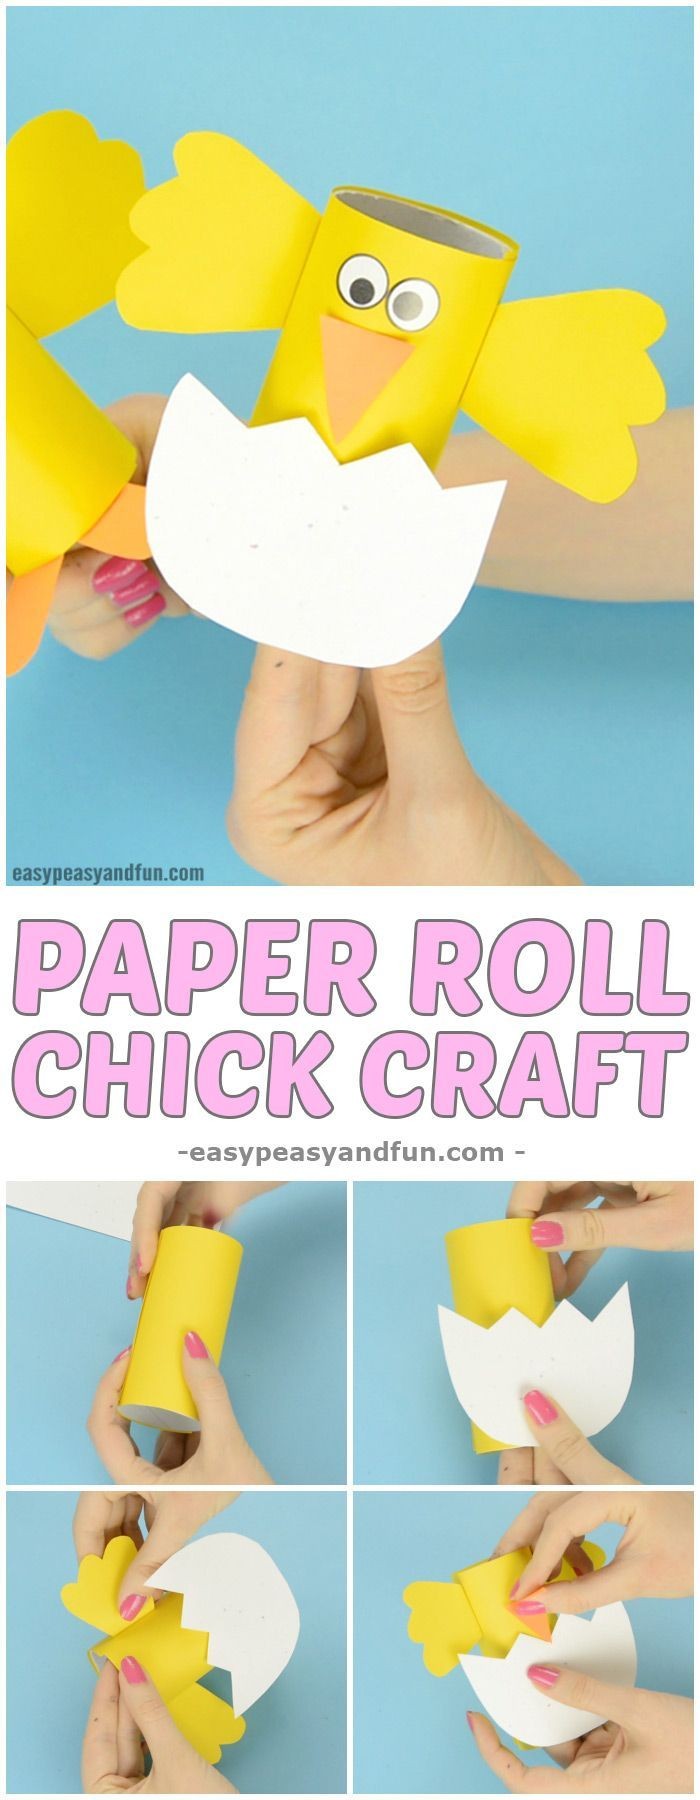 Half Life Papercraft 69 Best Paper Roll Crafts Images On Pinterest